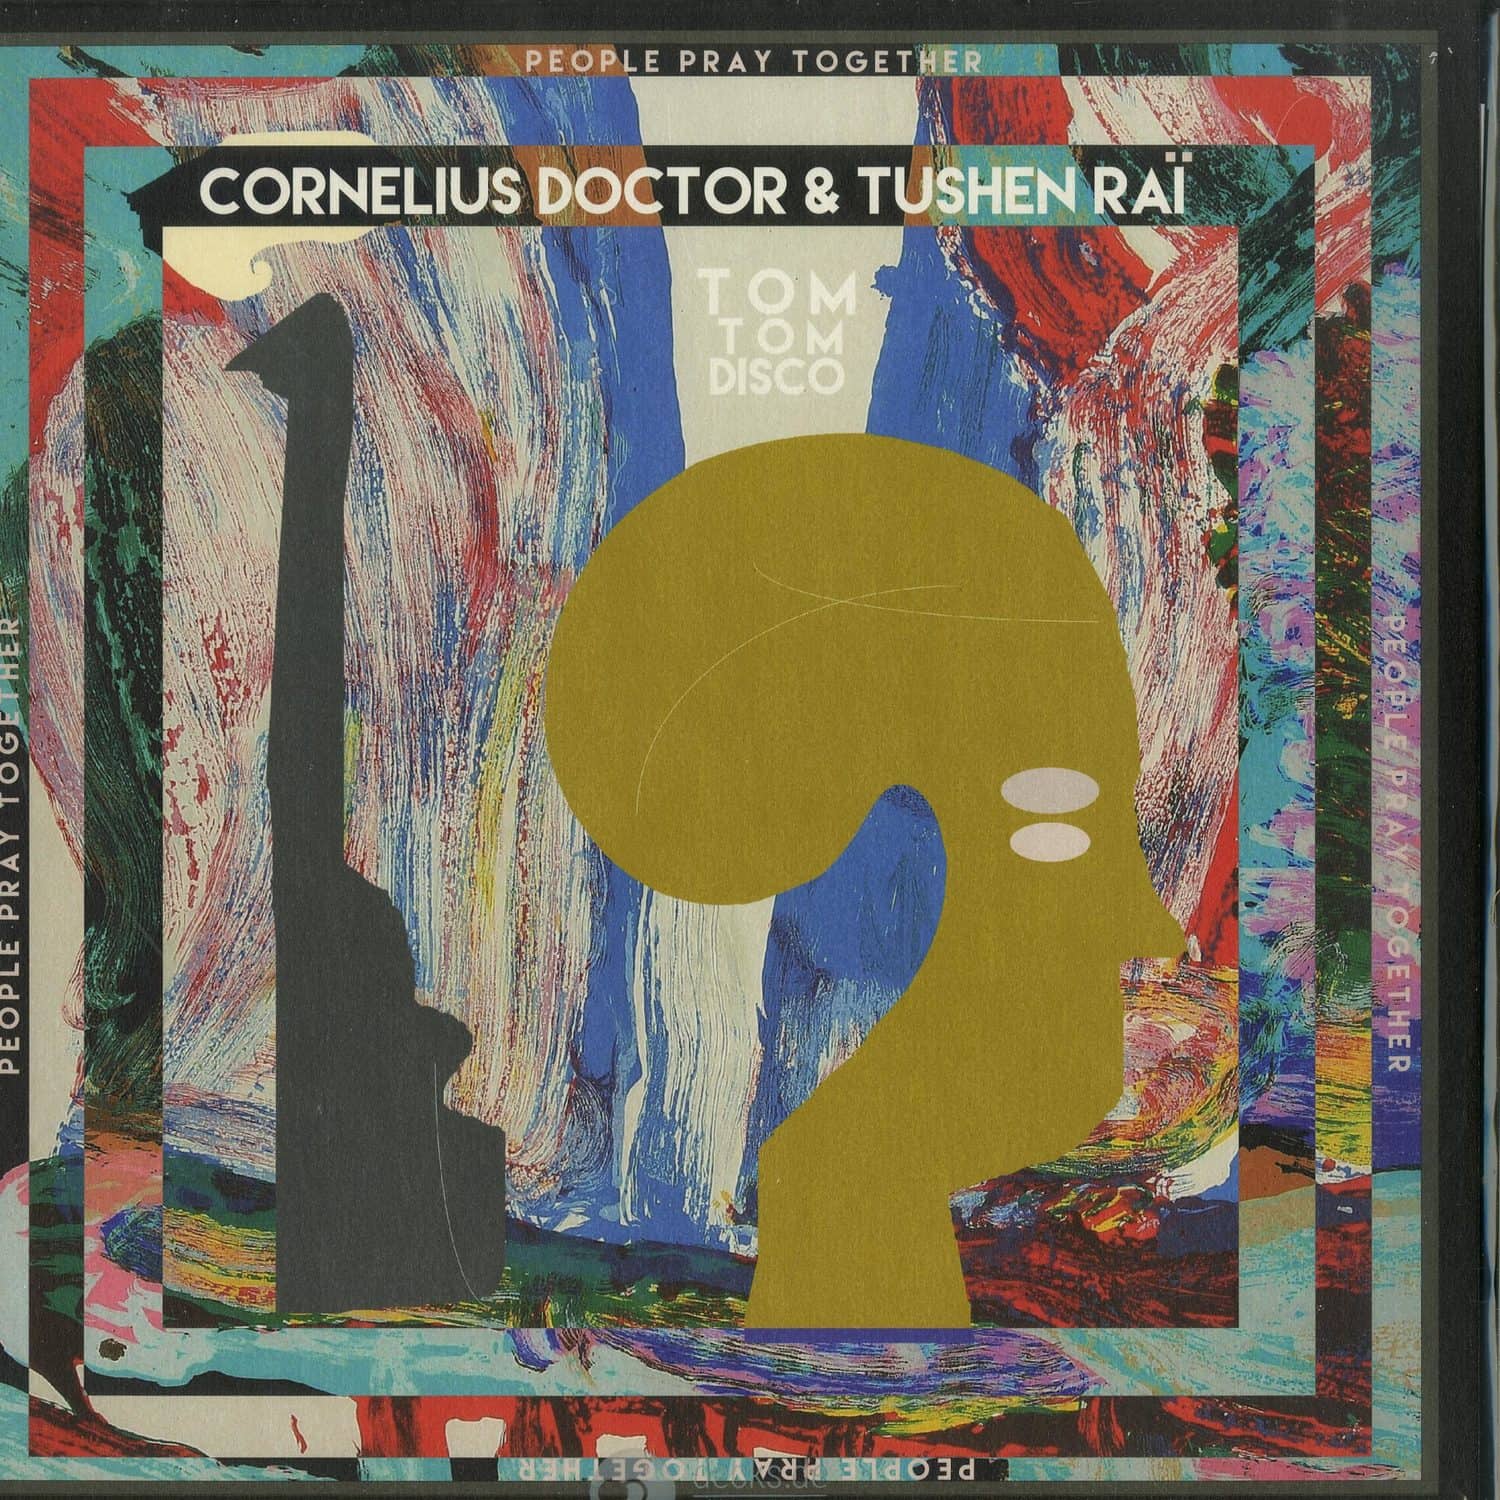 Cornelius Doctor & Tushen Rai - PEOPLE PRAY TOGETHER